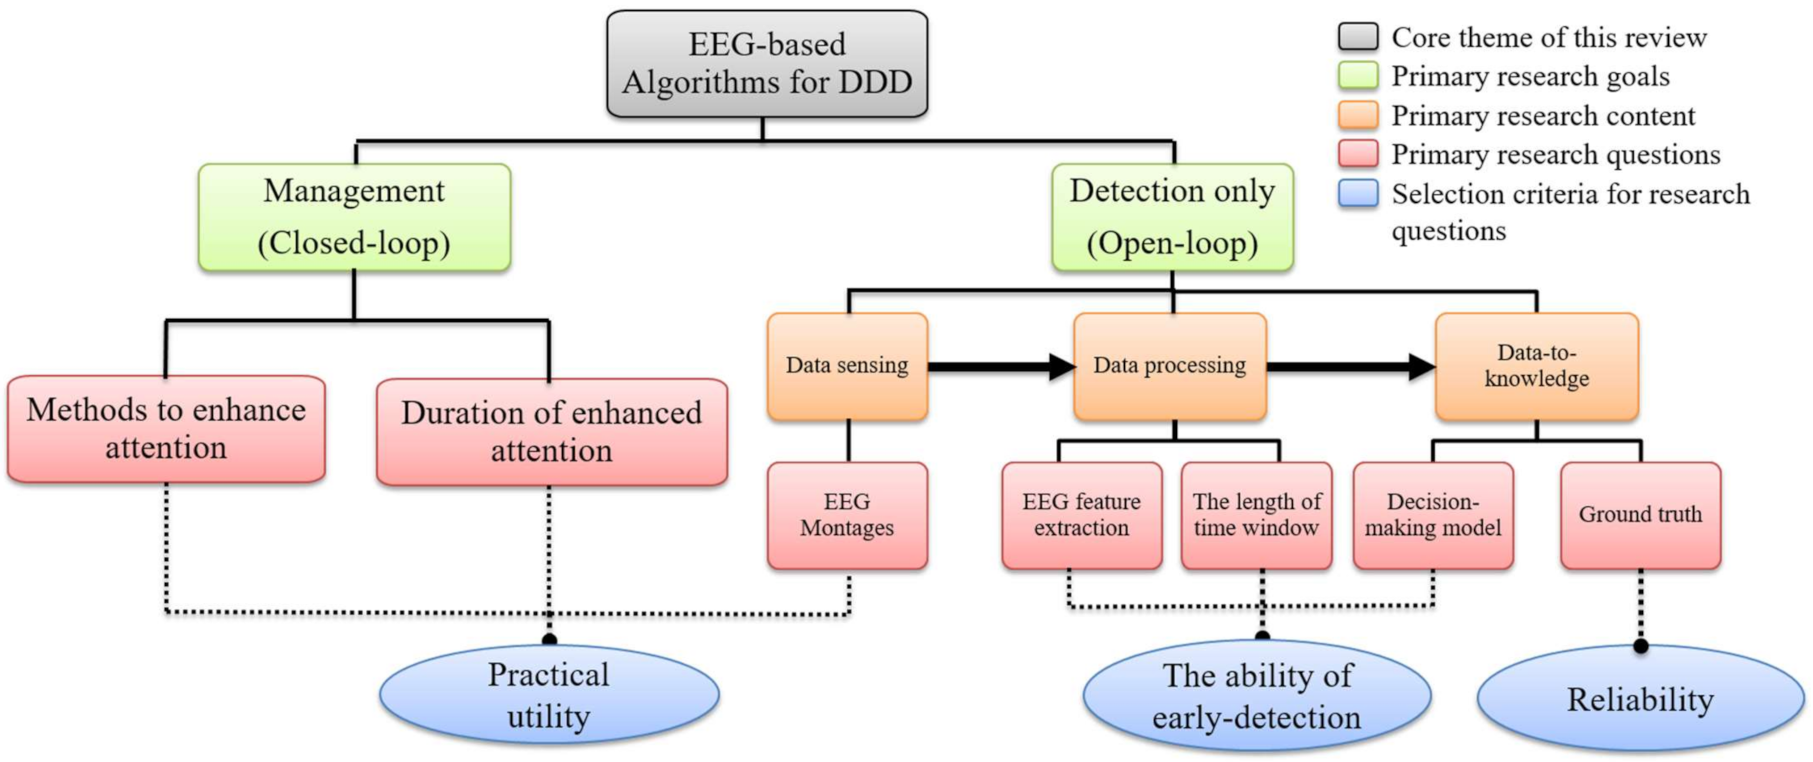 DDD methods evaluation matrix